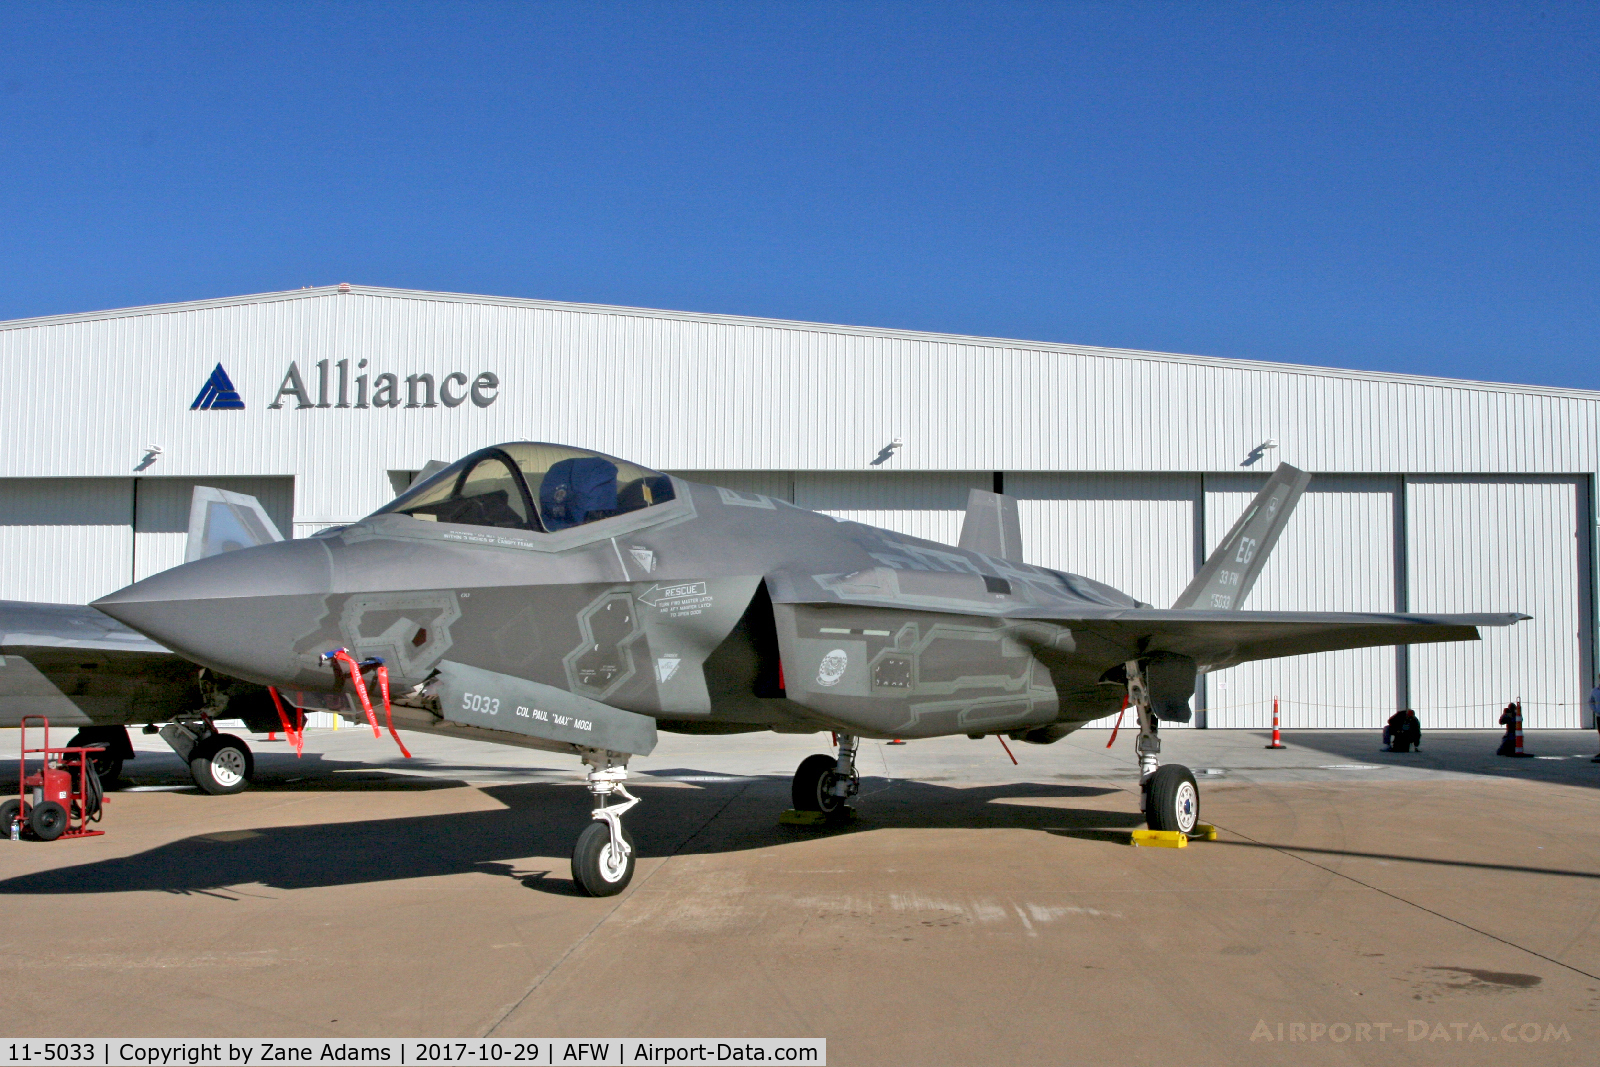 11-5033, 2014 Lockheed Martin F-35A Lightning II C/N AF-44, At the 2019 Alliance Airshow